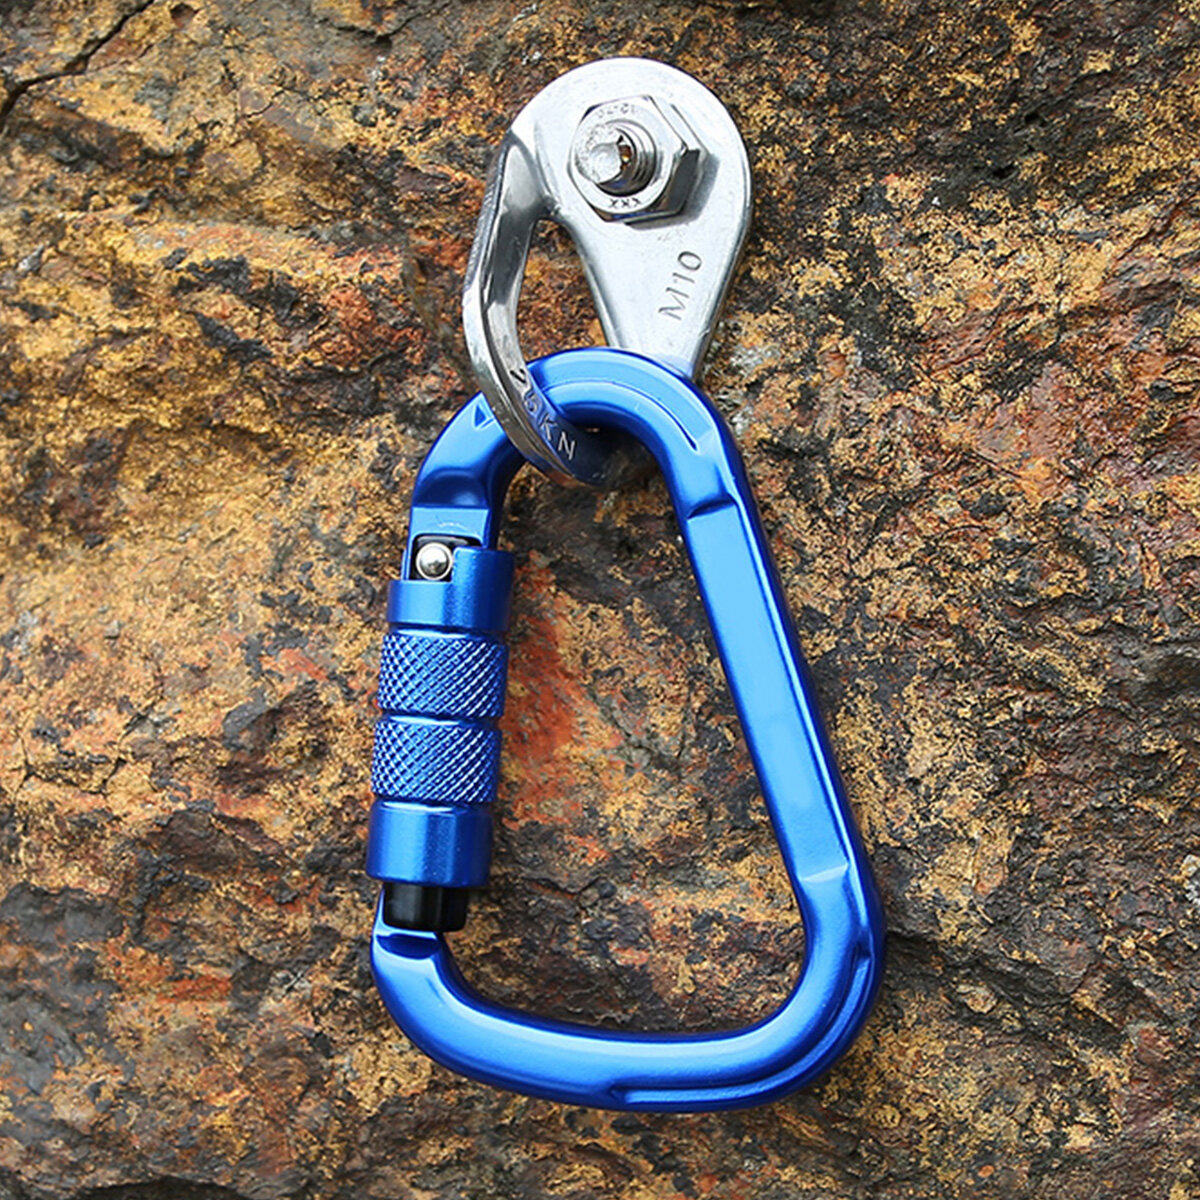 wholesale rock climbing gear, wholesale survival equipment, climbing gear carabiner